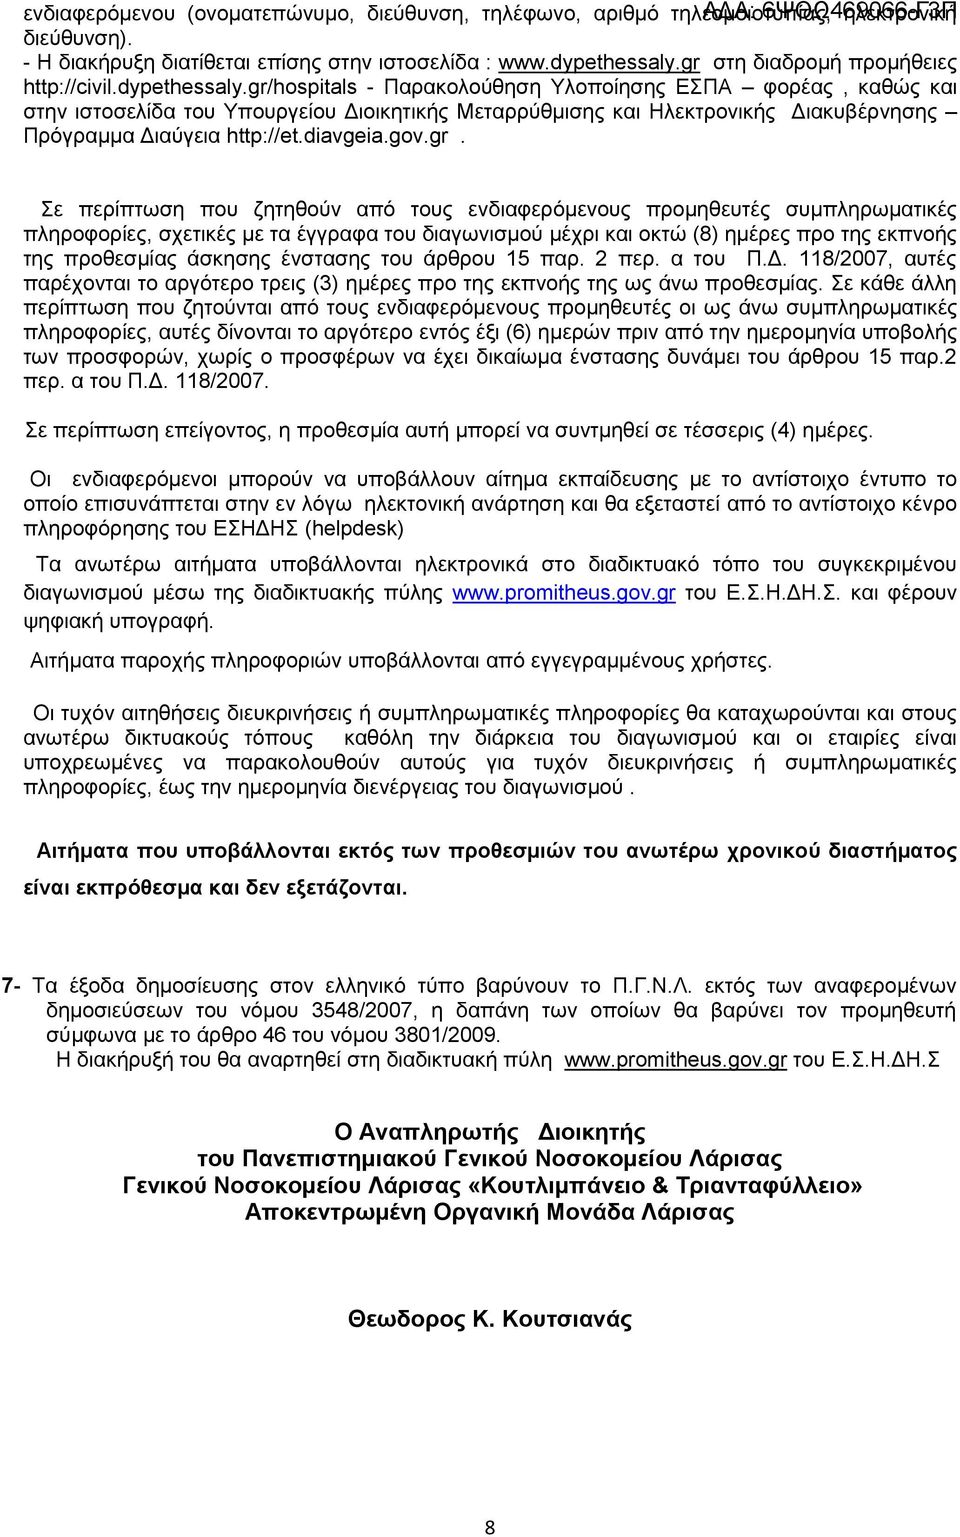 gr/hospitals - Παρακολούθηση Υλοποίησης ΕΣΠΑ φορέας, καθώς και στην ιστοσελίδα του Υπουργείου Διοικητικής Μεταρρύθμισης και Ηλεκτρονικής Διακυβέρνησης Πρόγραμμα Διαύγεια http://et.diavgeia.gov.gr. Σε